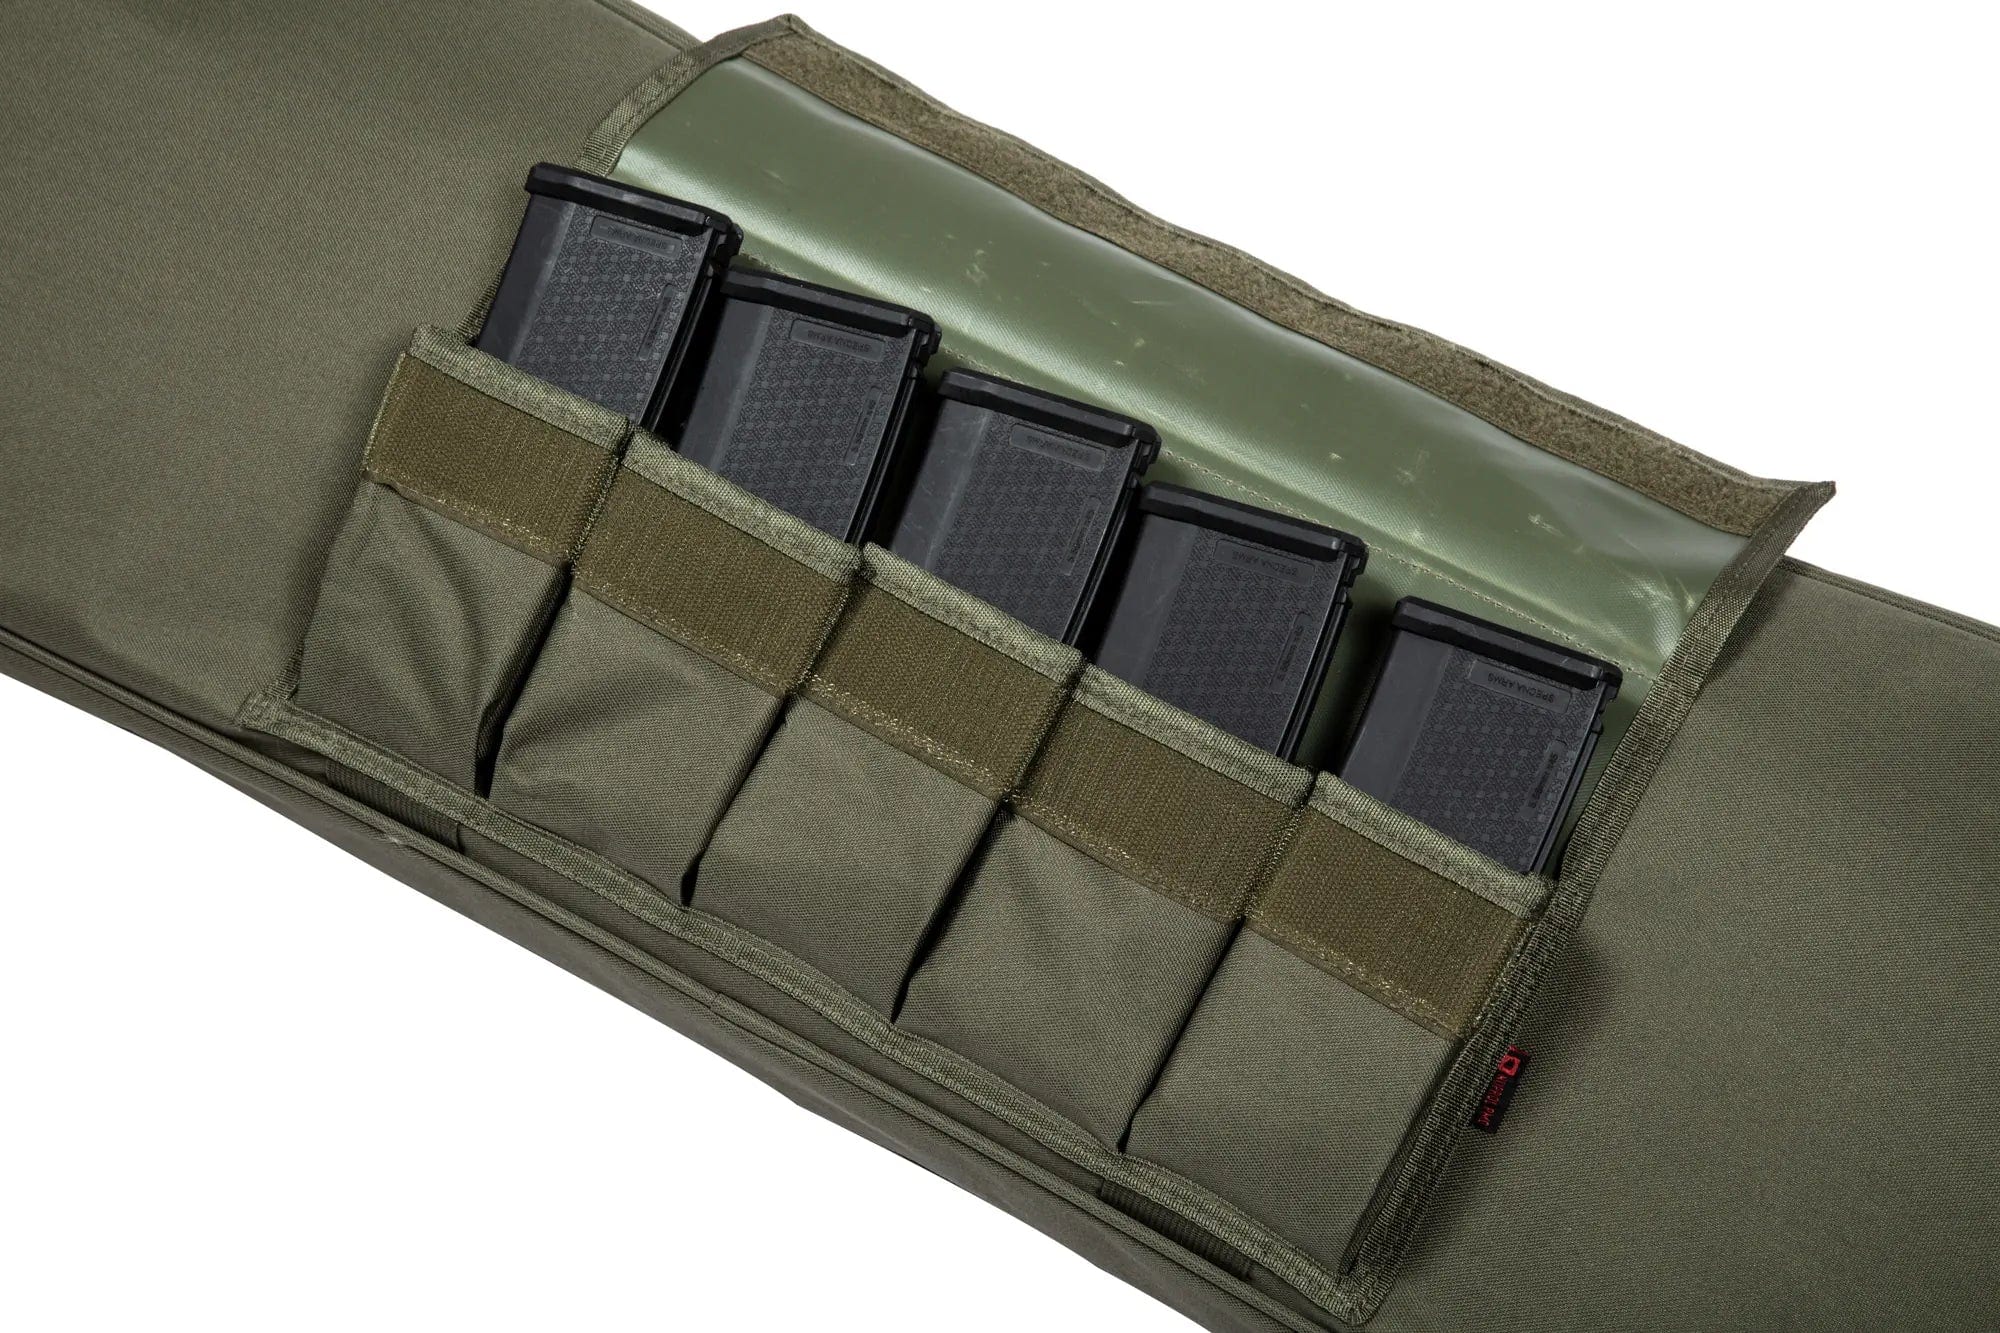 PMC Essentials Soft Rifle Bag 42"- Verde